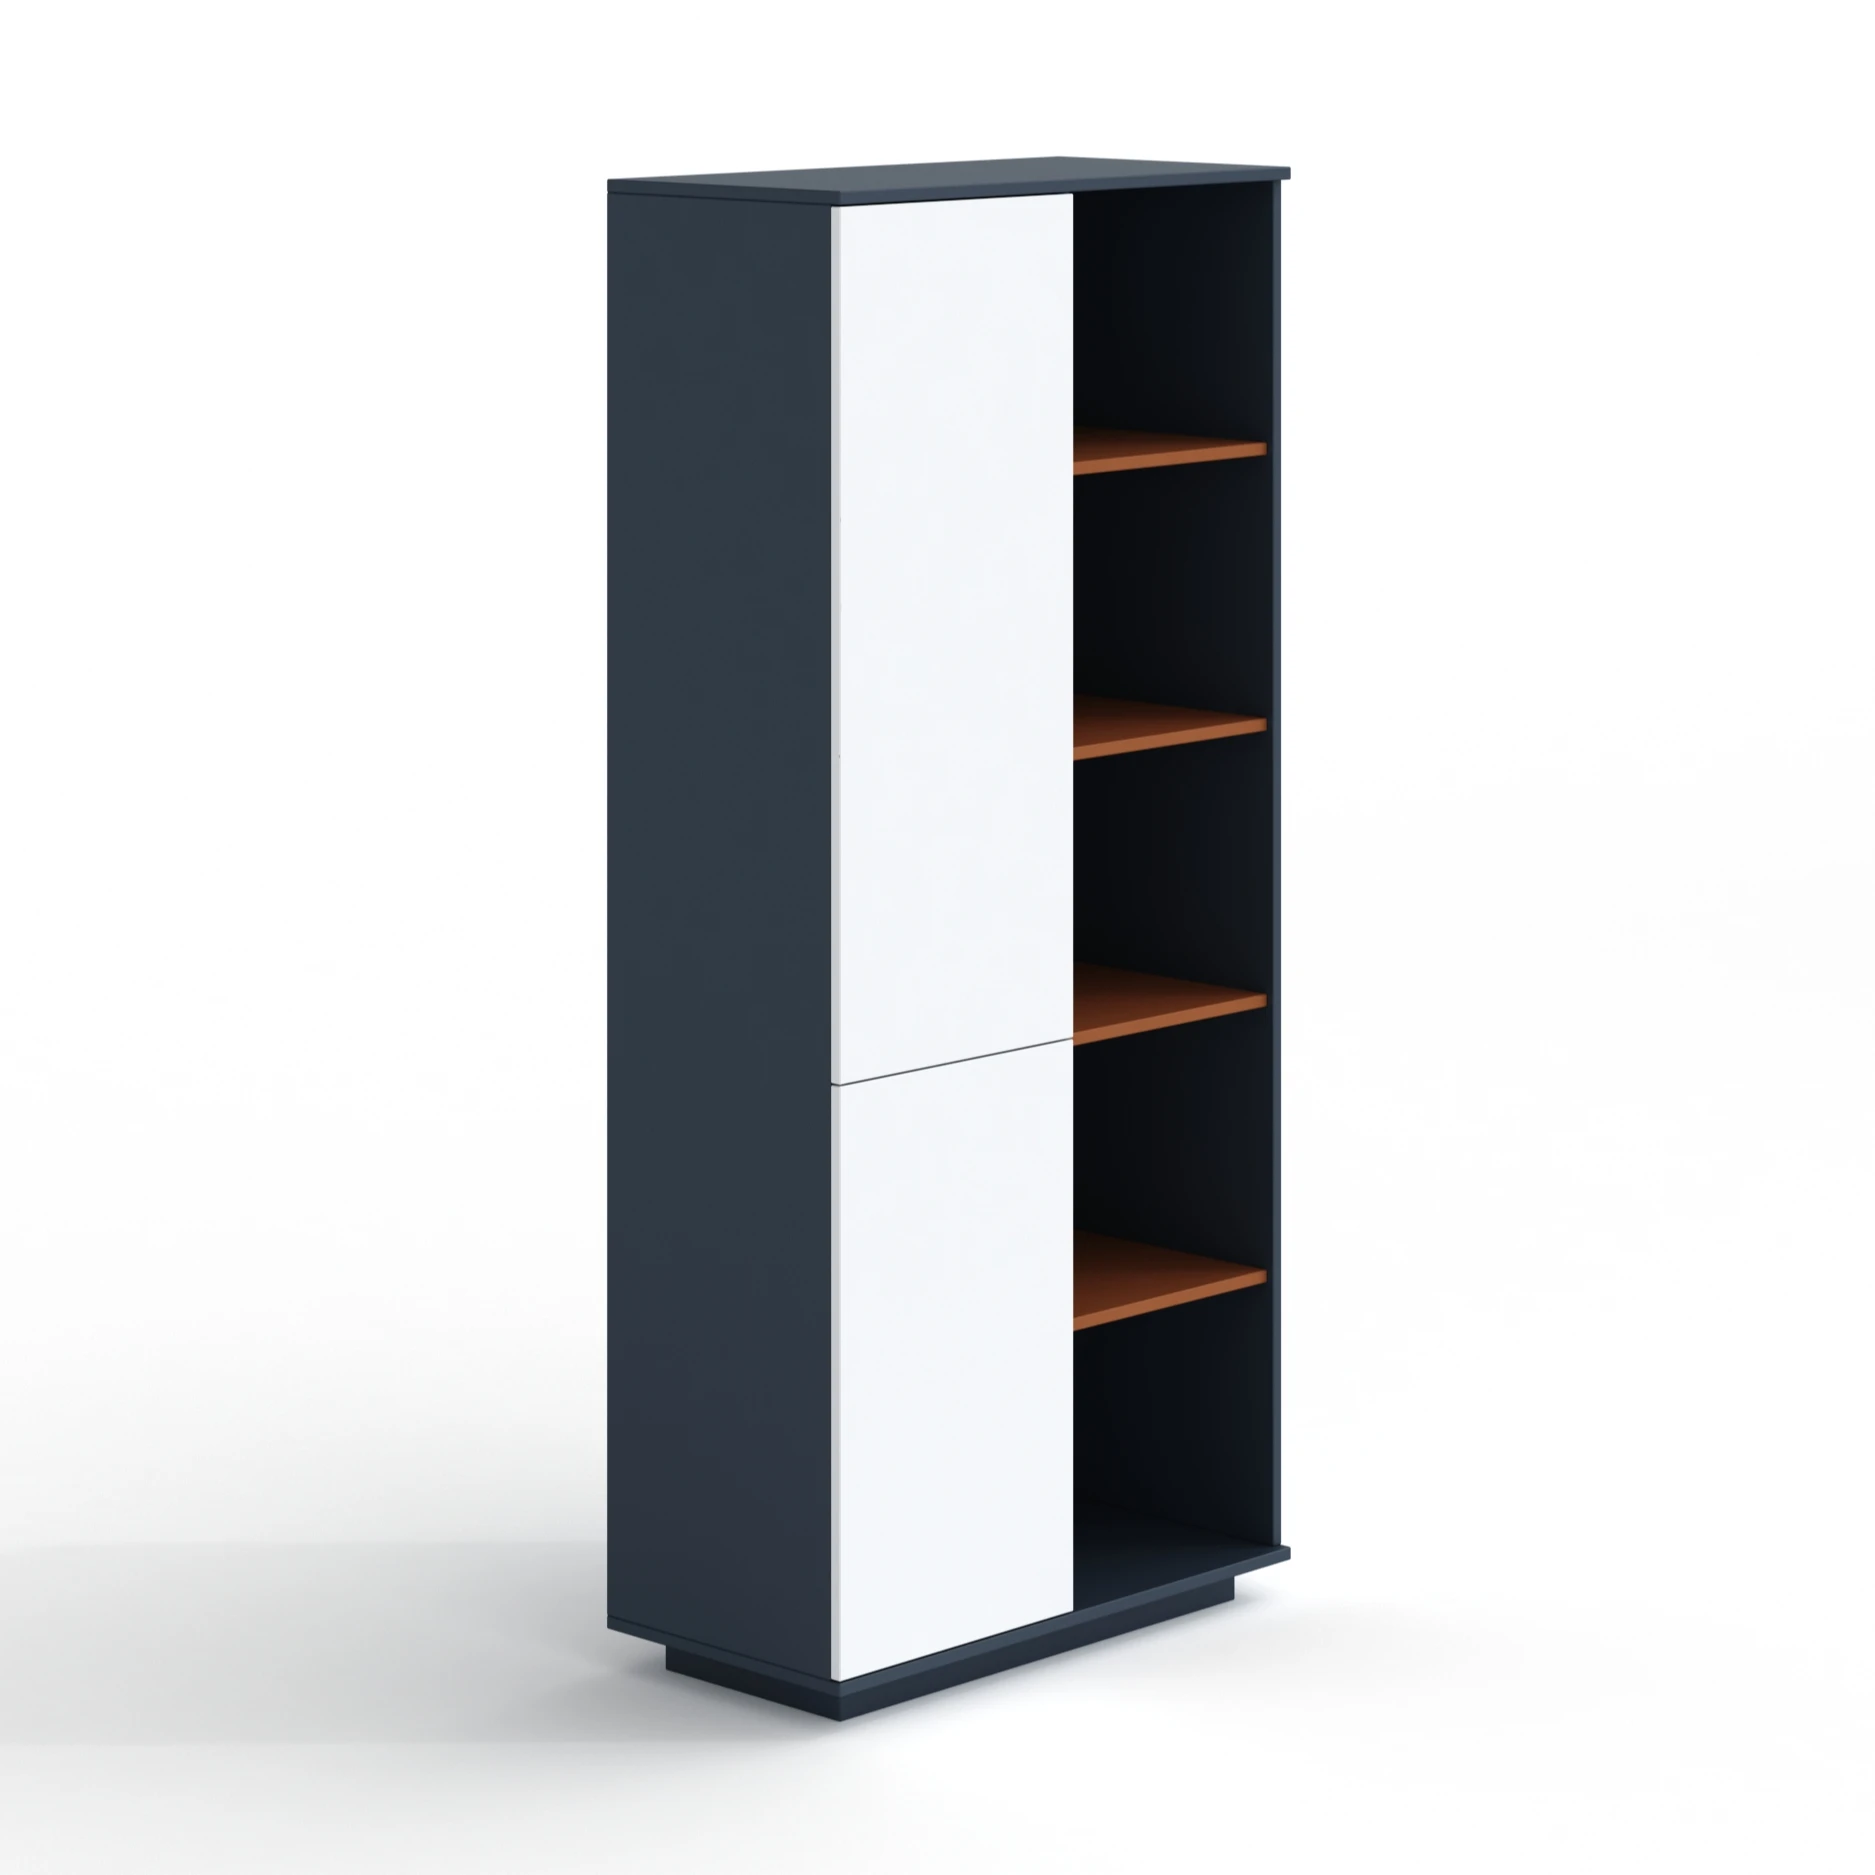 2019 Manufacture Modern Office Furniture 3 Drawer File Cabinet